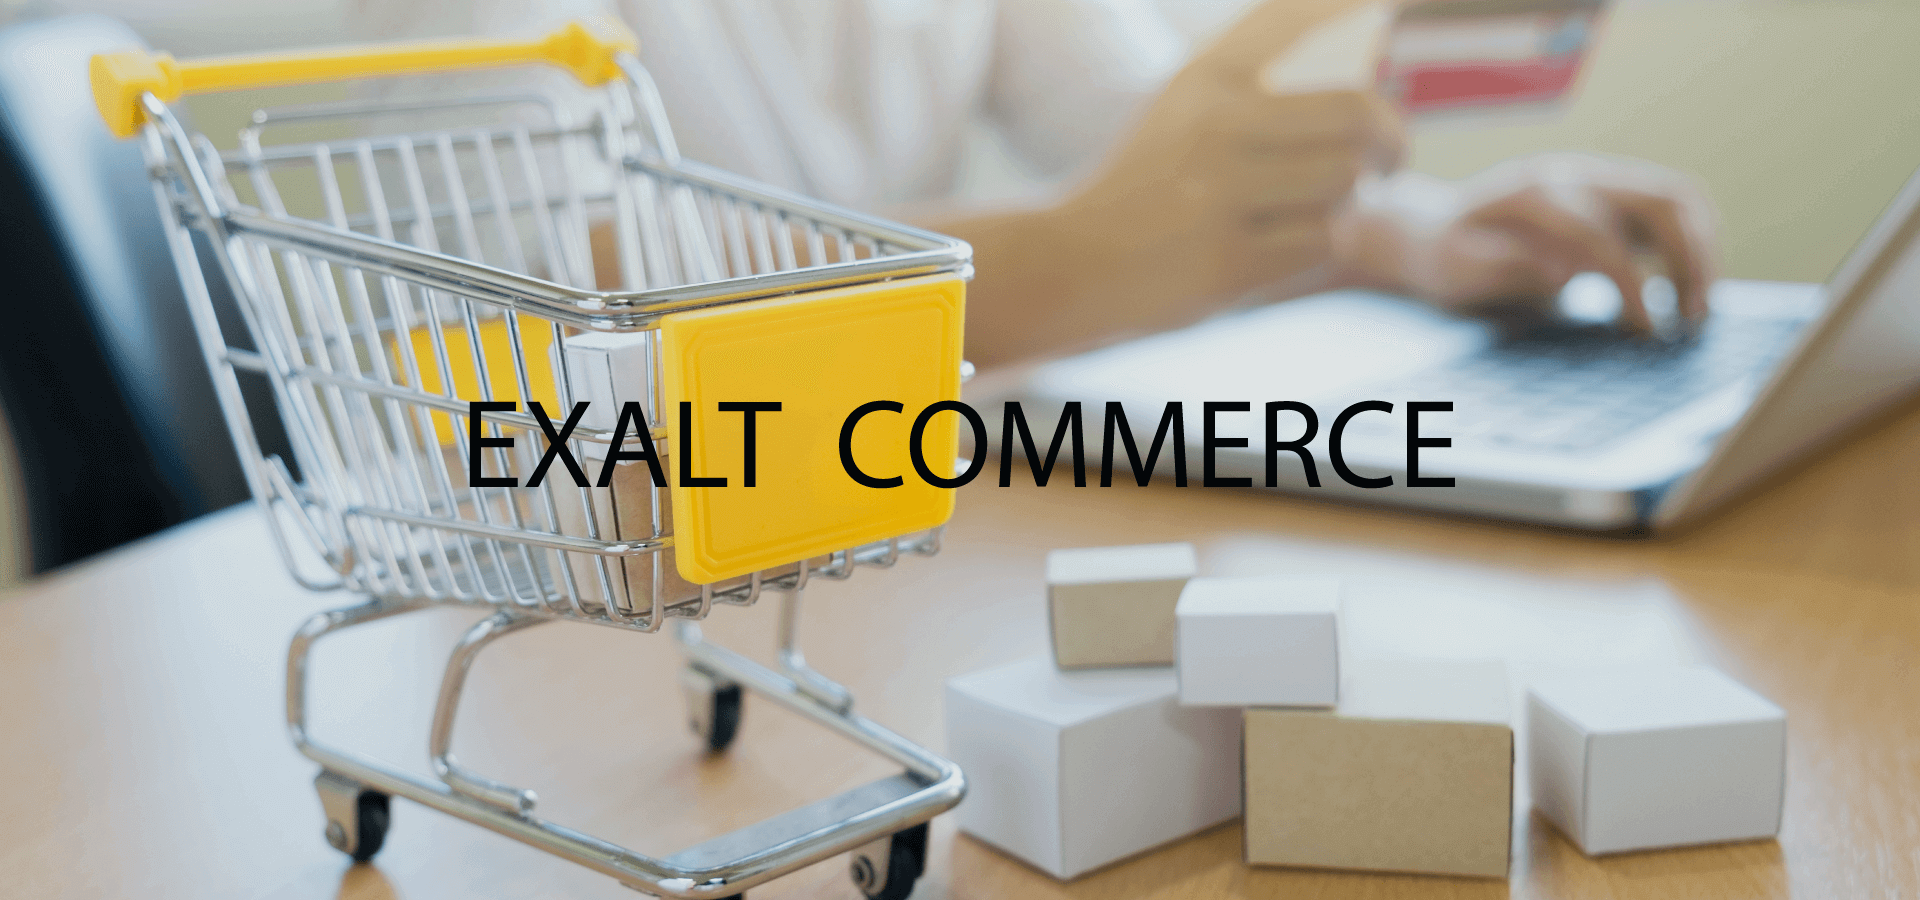 Exalt Commerce